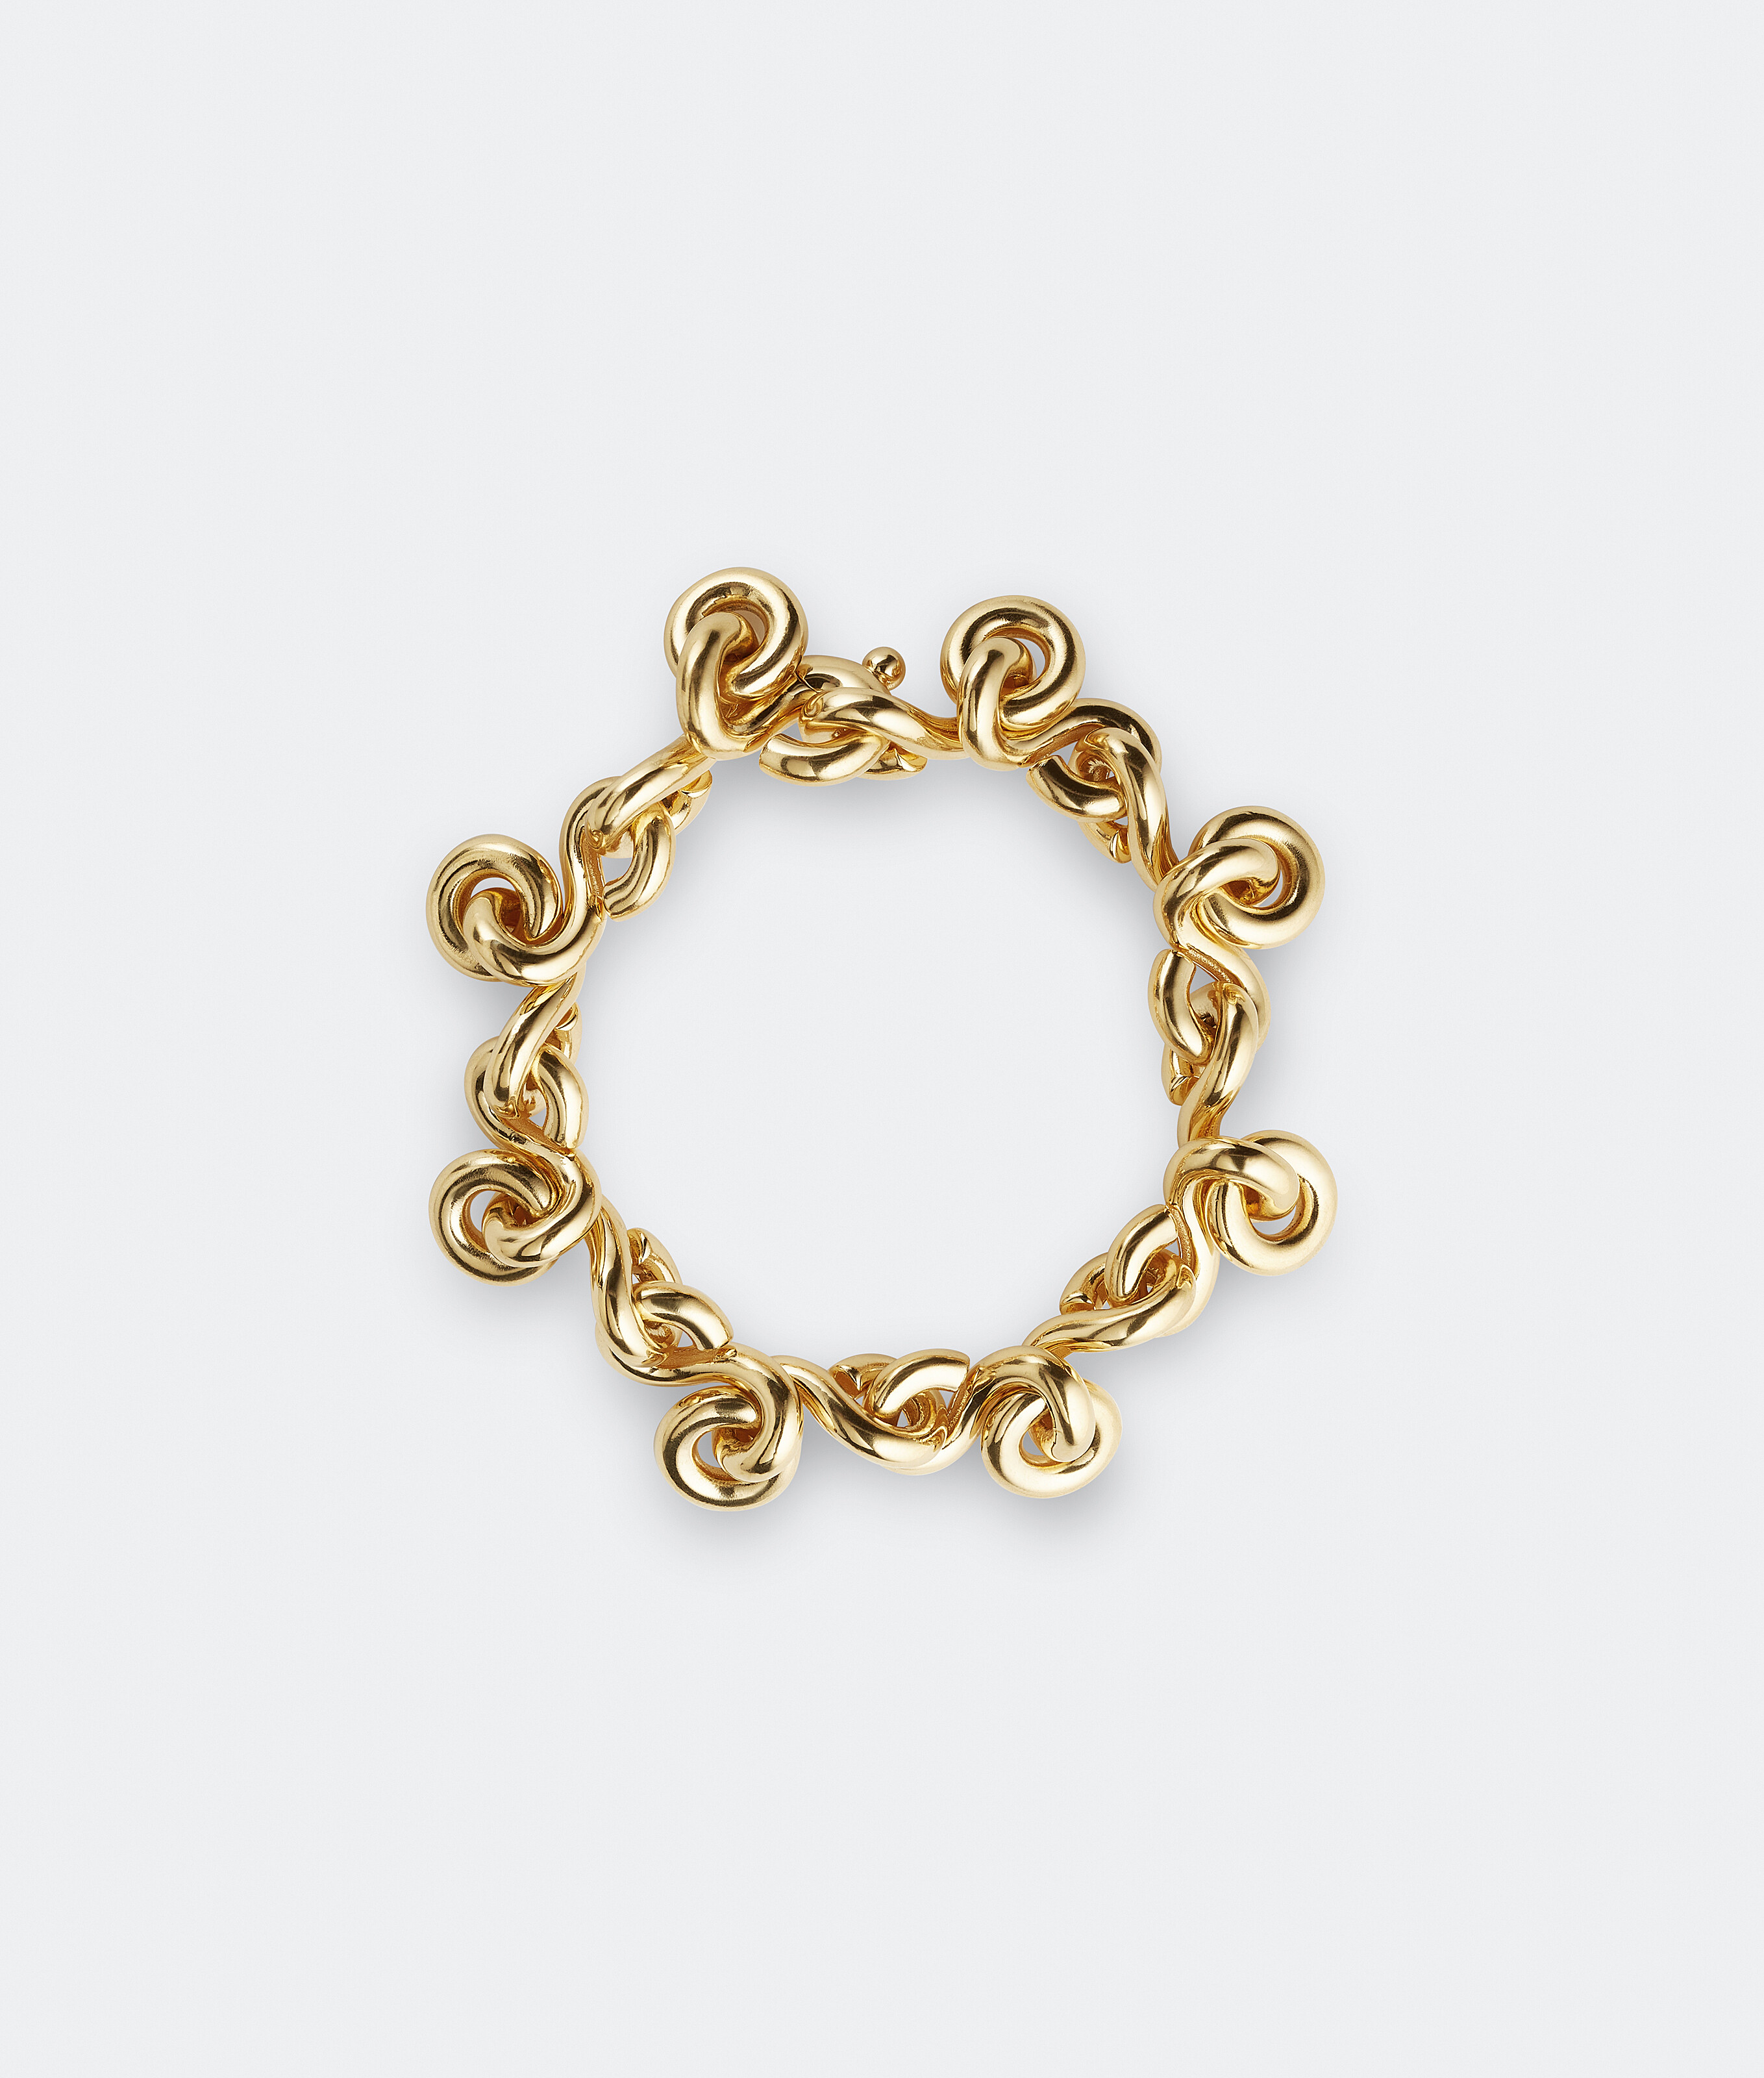 Bottega Veneta® Men's Intreccio Bracelet in Yellow Gold. Shop online now.